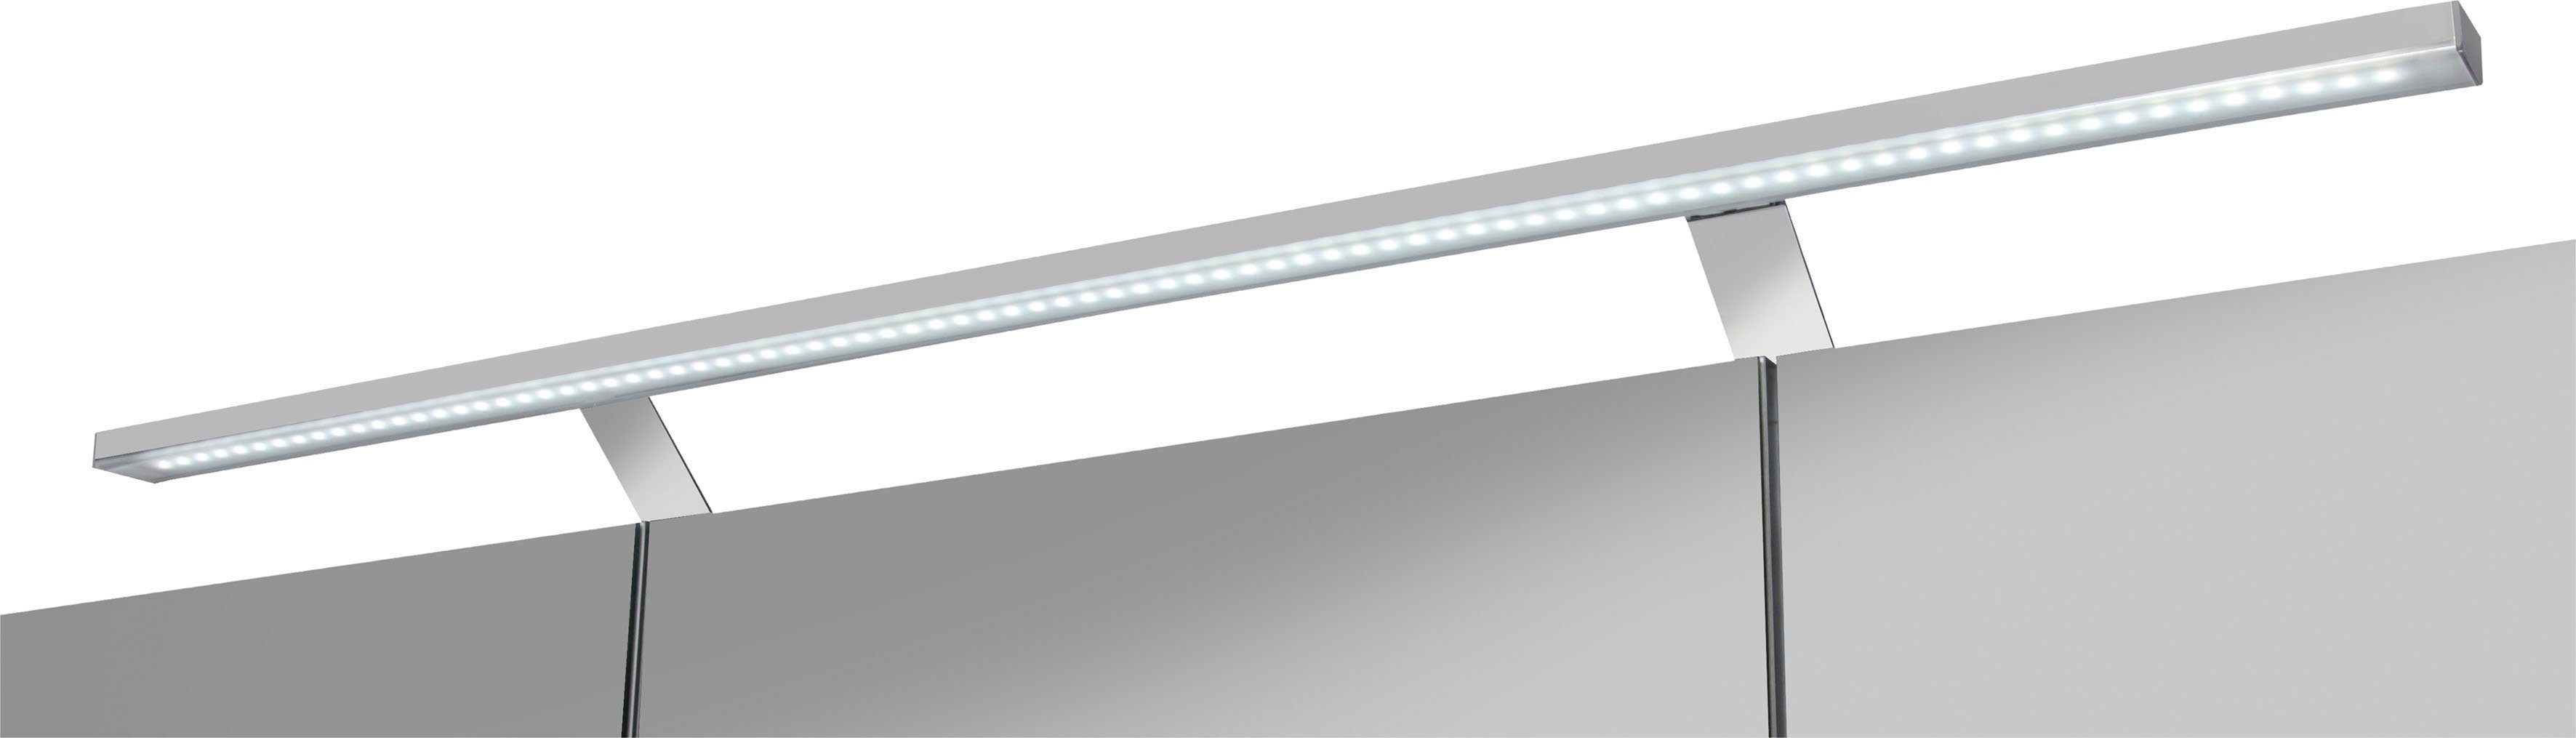 LED-Beleuchtung, Breite 3-türig, Torino | kreideweiß cm, 120 Spiegelschrank welltime kreideweiß Schalter-/Steckdosenbox